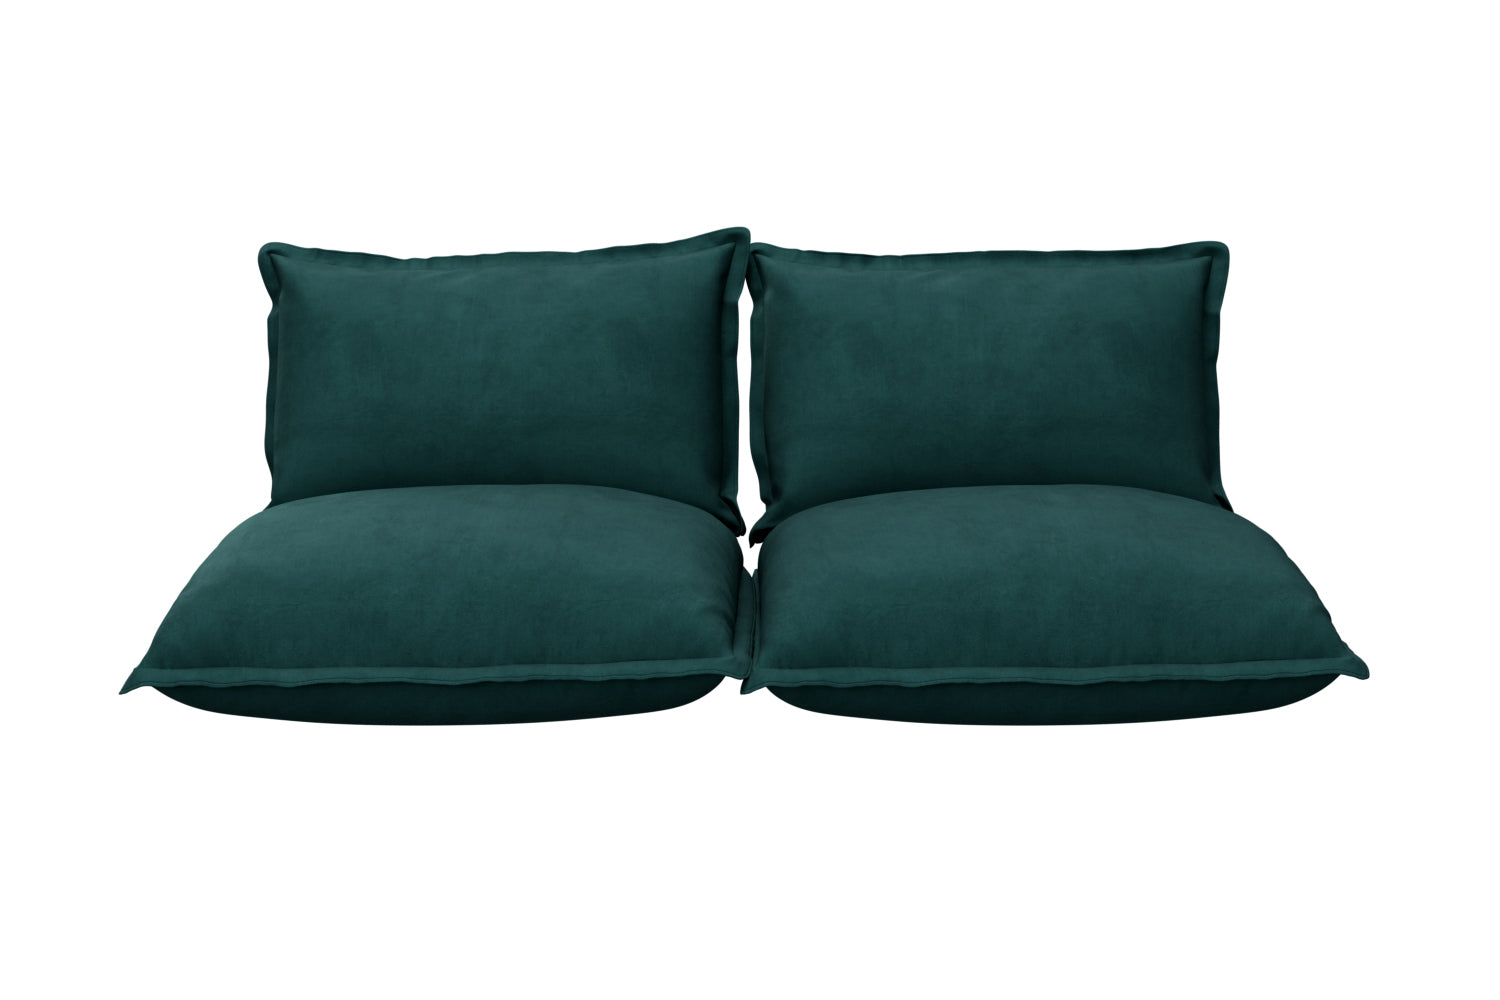 Cushion - Small Edition - Green Velvet - Sézane